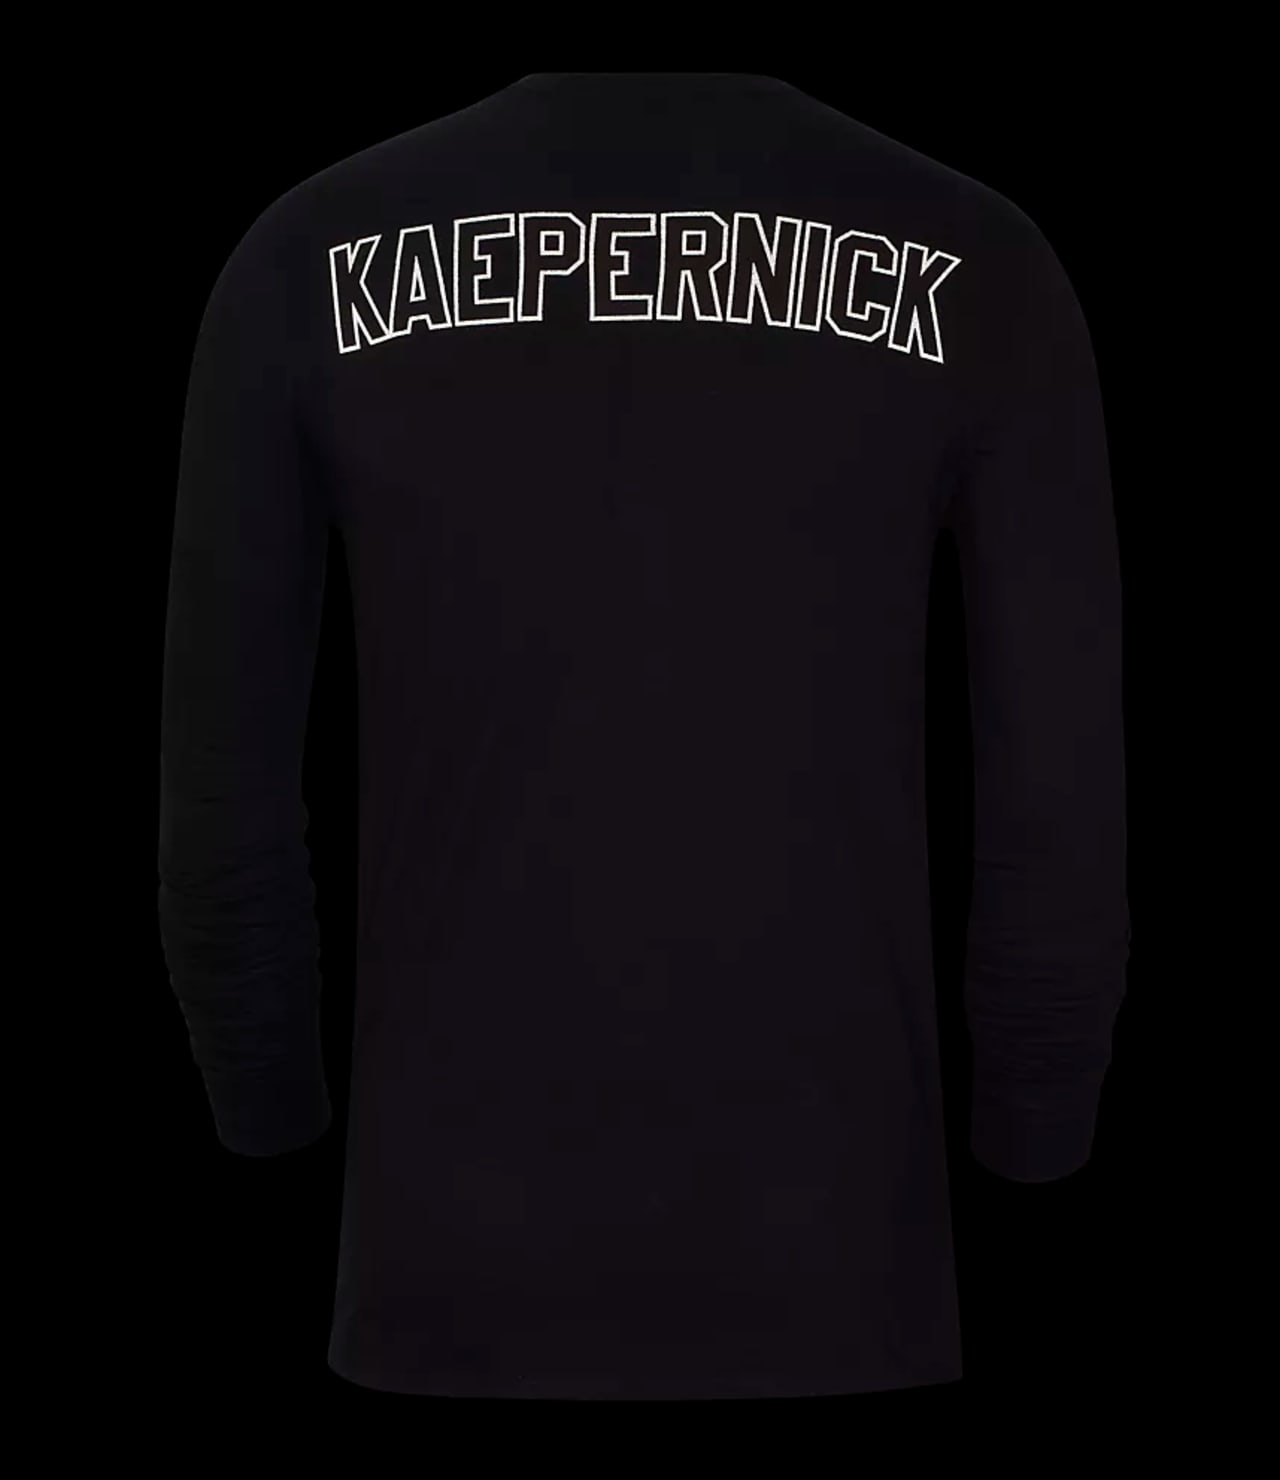 colin kaepernick clothing line